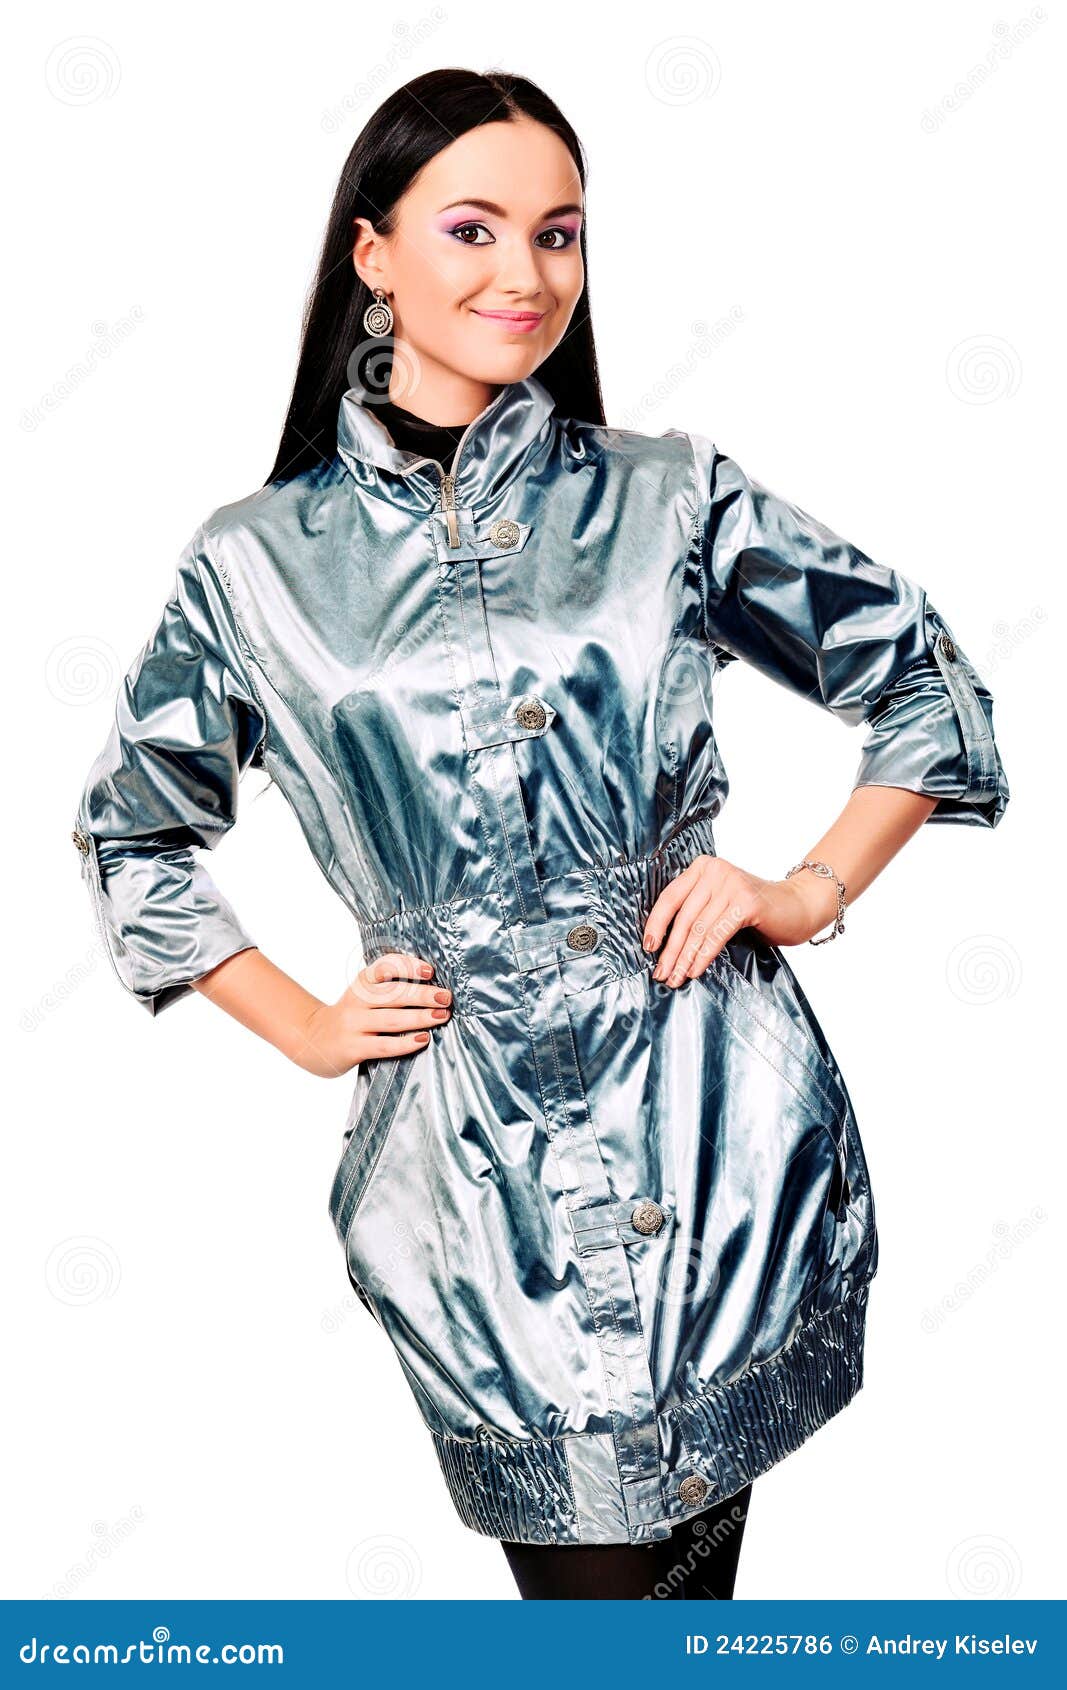 Silver raincoat stock photo. Image of people, model, isolated - 24225786